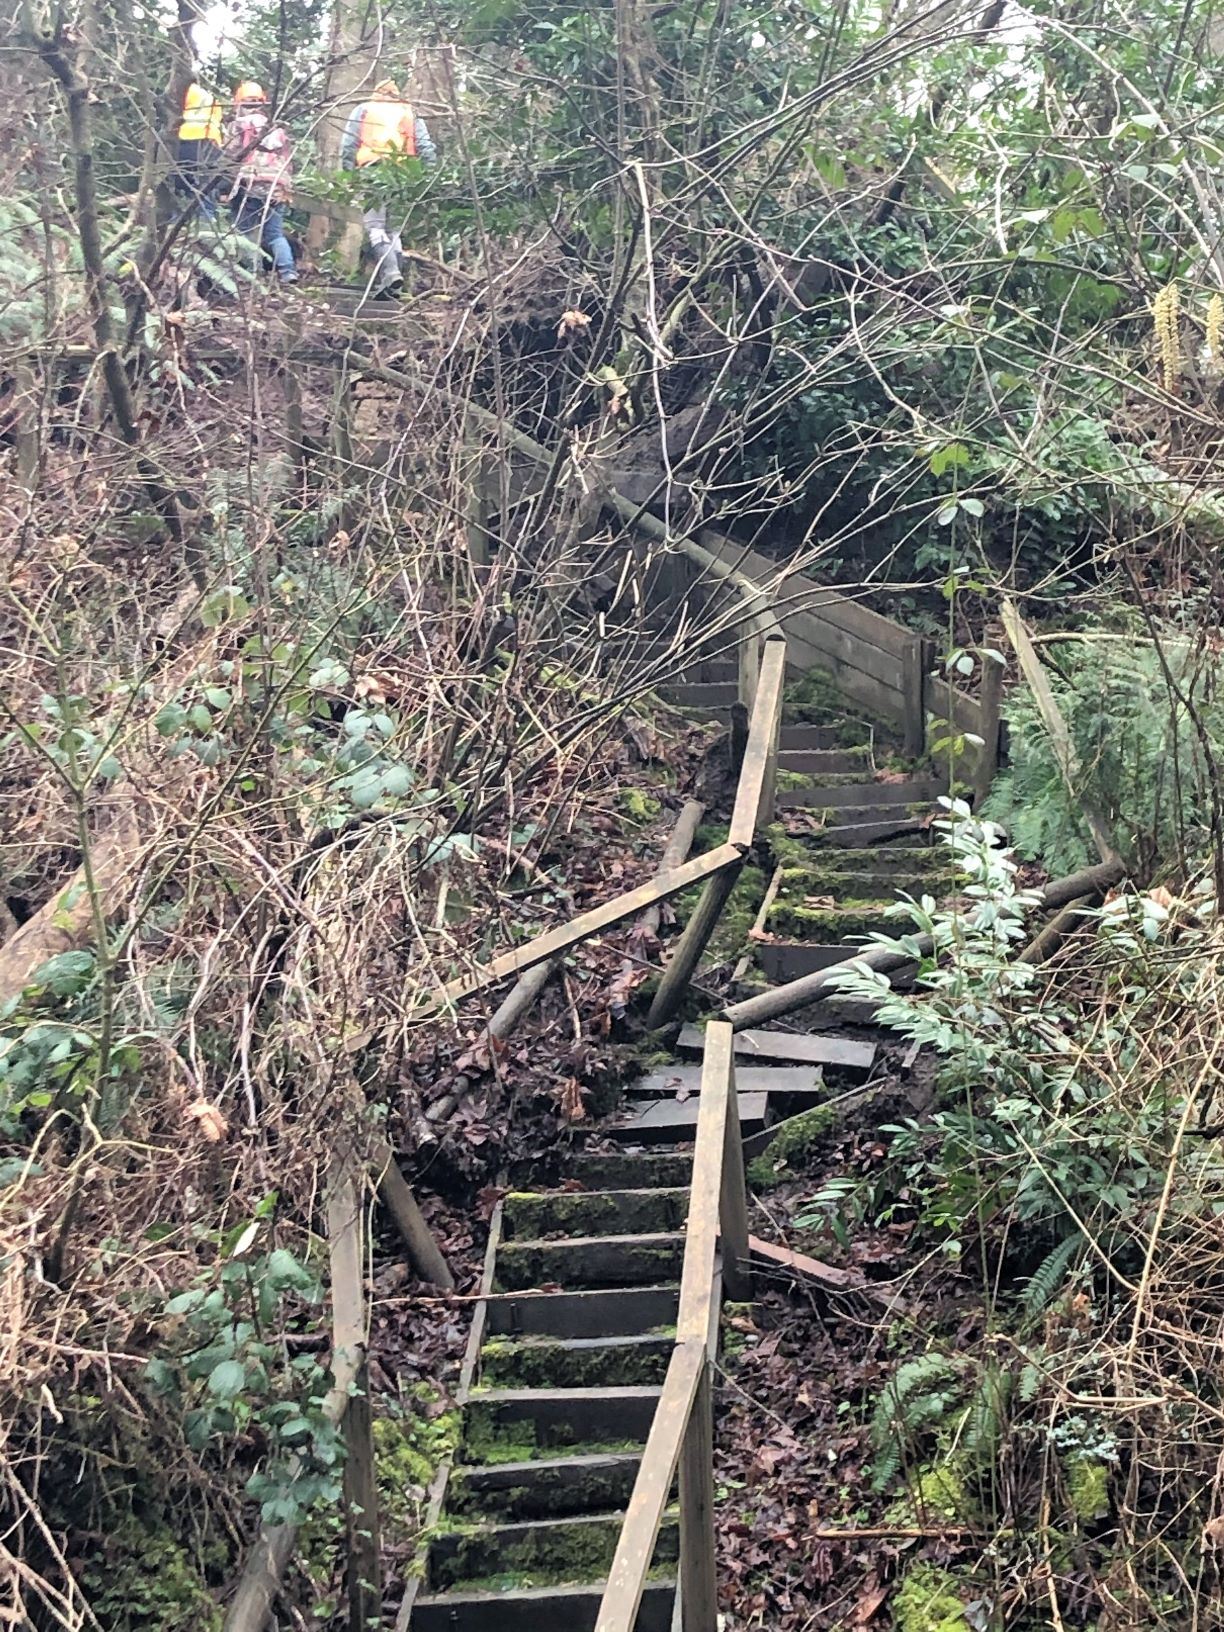 Ruth Johnson Park and Coldicutt Ravine stair damage